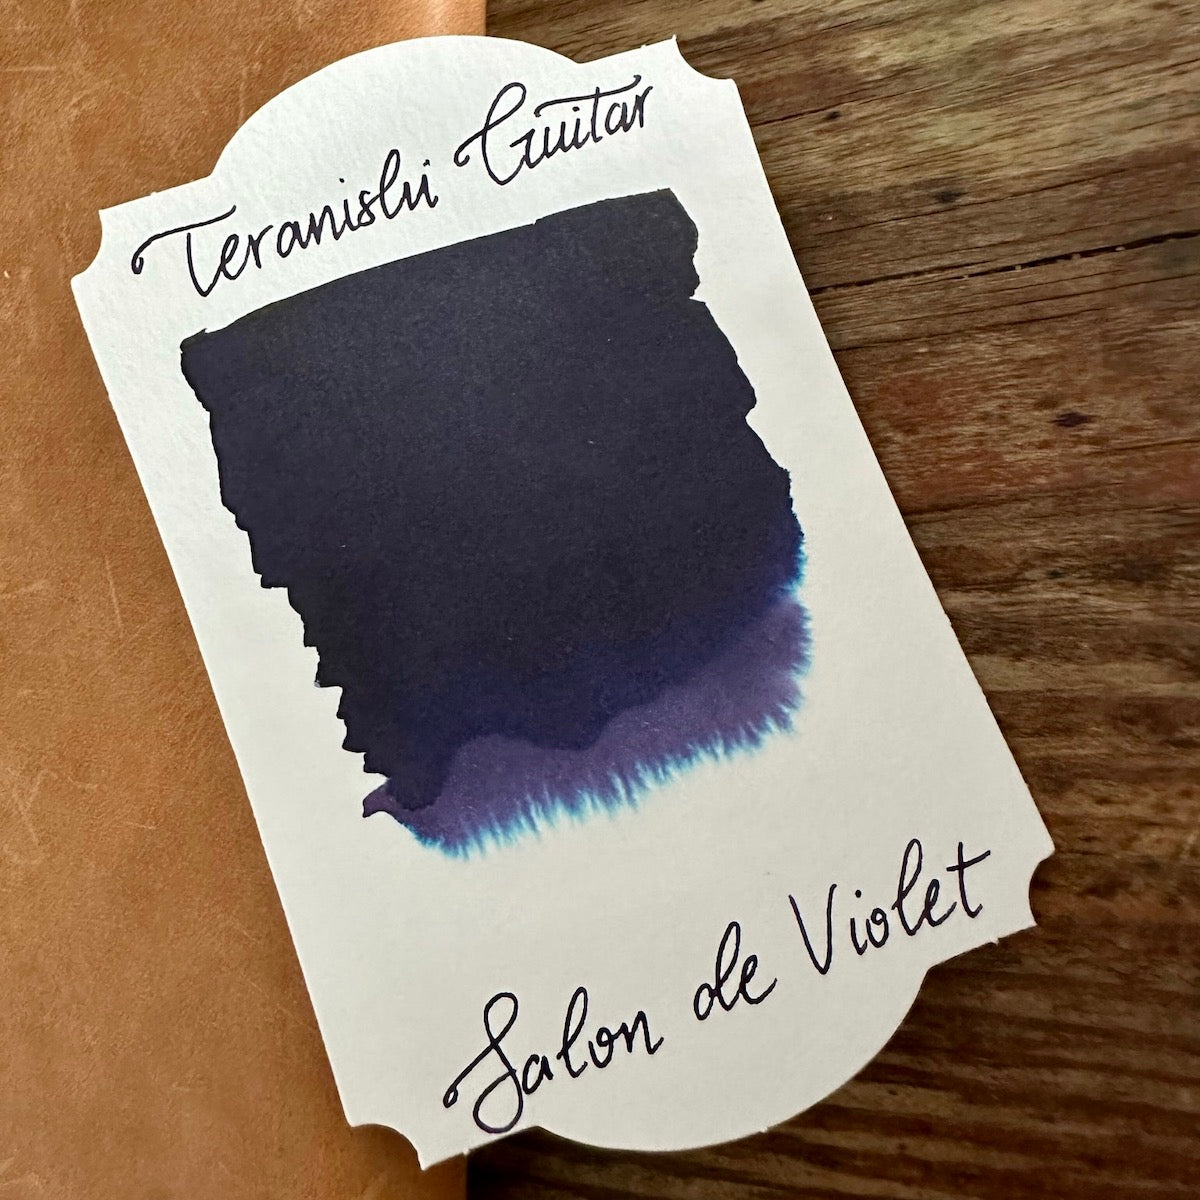 Teranishi Guitar Taisho Roman Haikara Ink - Salon de Violette